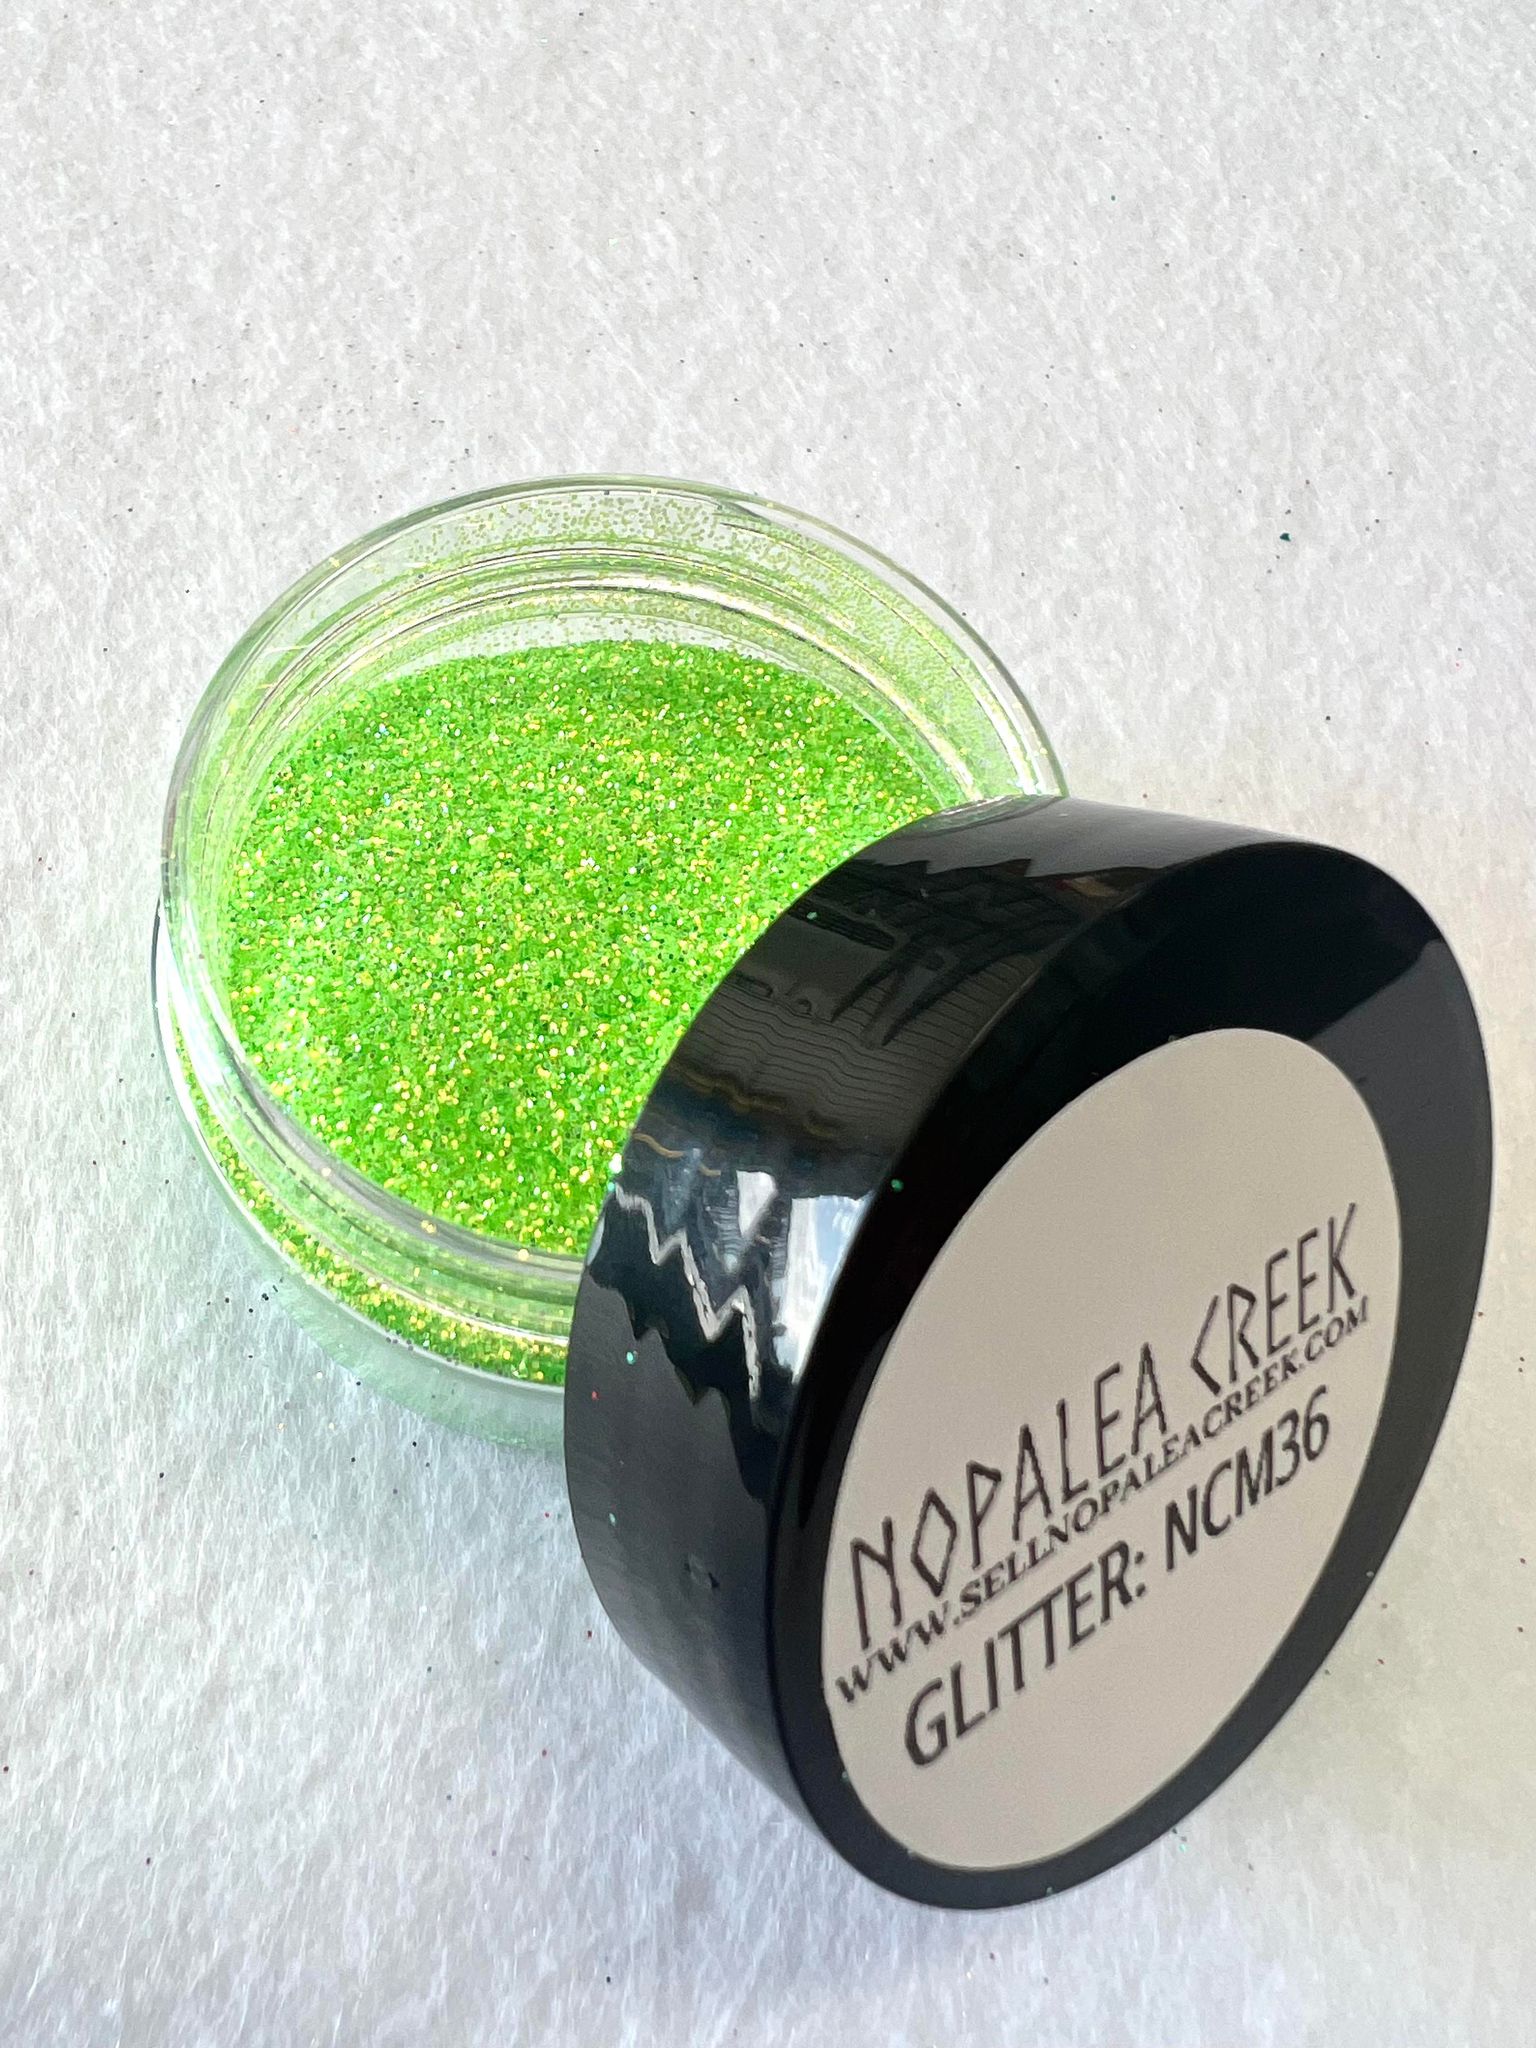 NCM36 Glitter